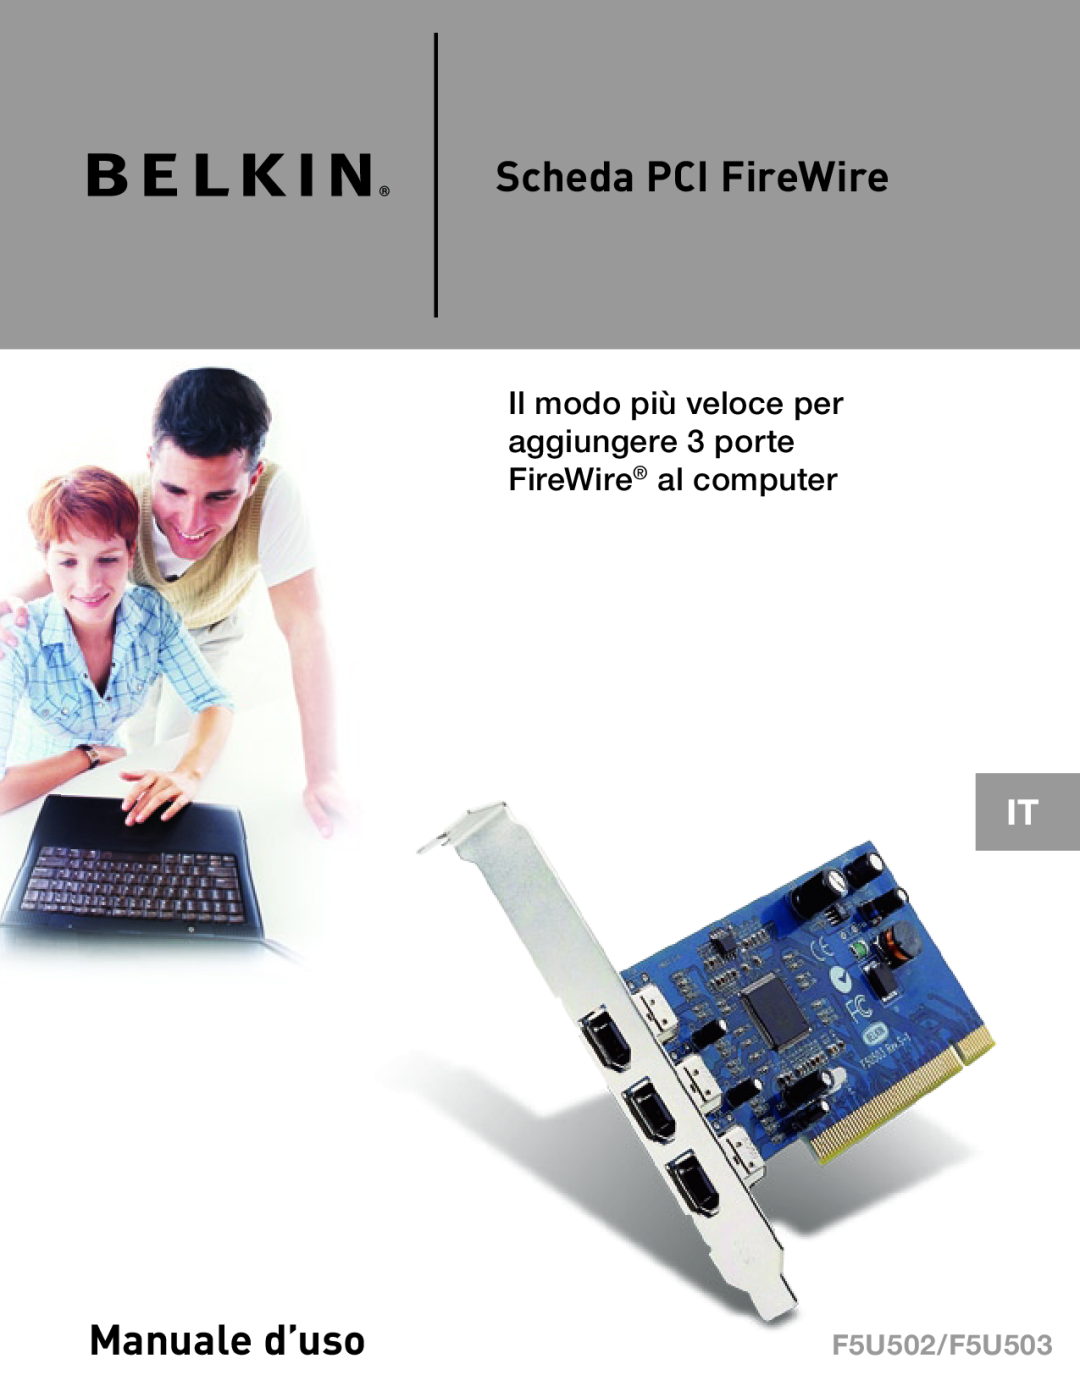 Belkin F5U502, F5U503 Scheda PCI FireWire, Manuale d’uso, Il modo più veloce per aggiungere 3 porte FireWire al computer 